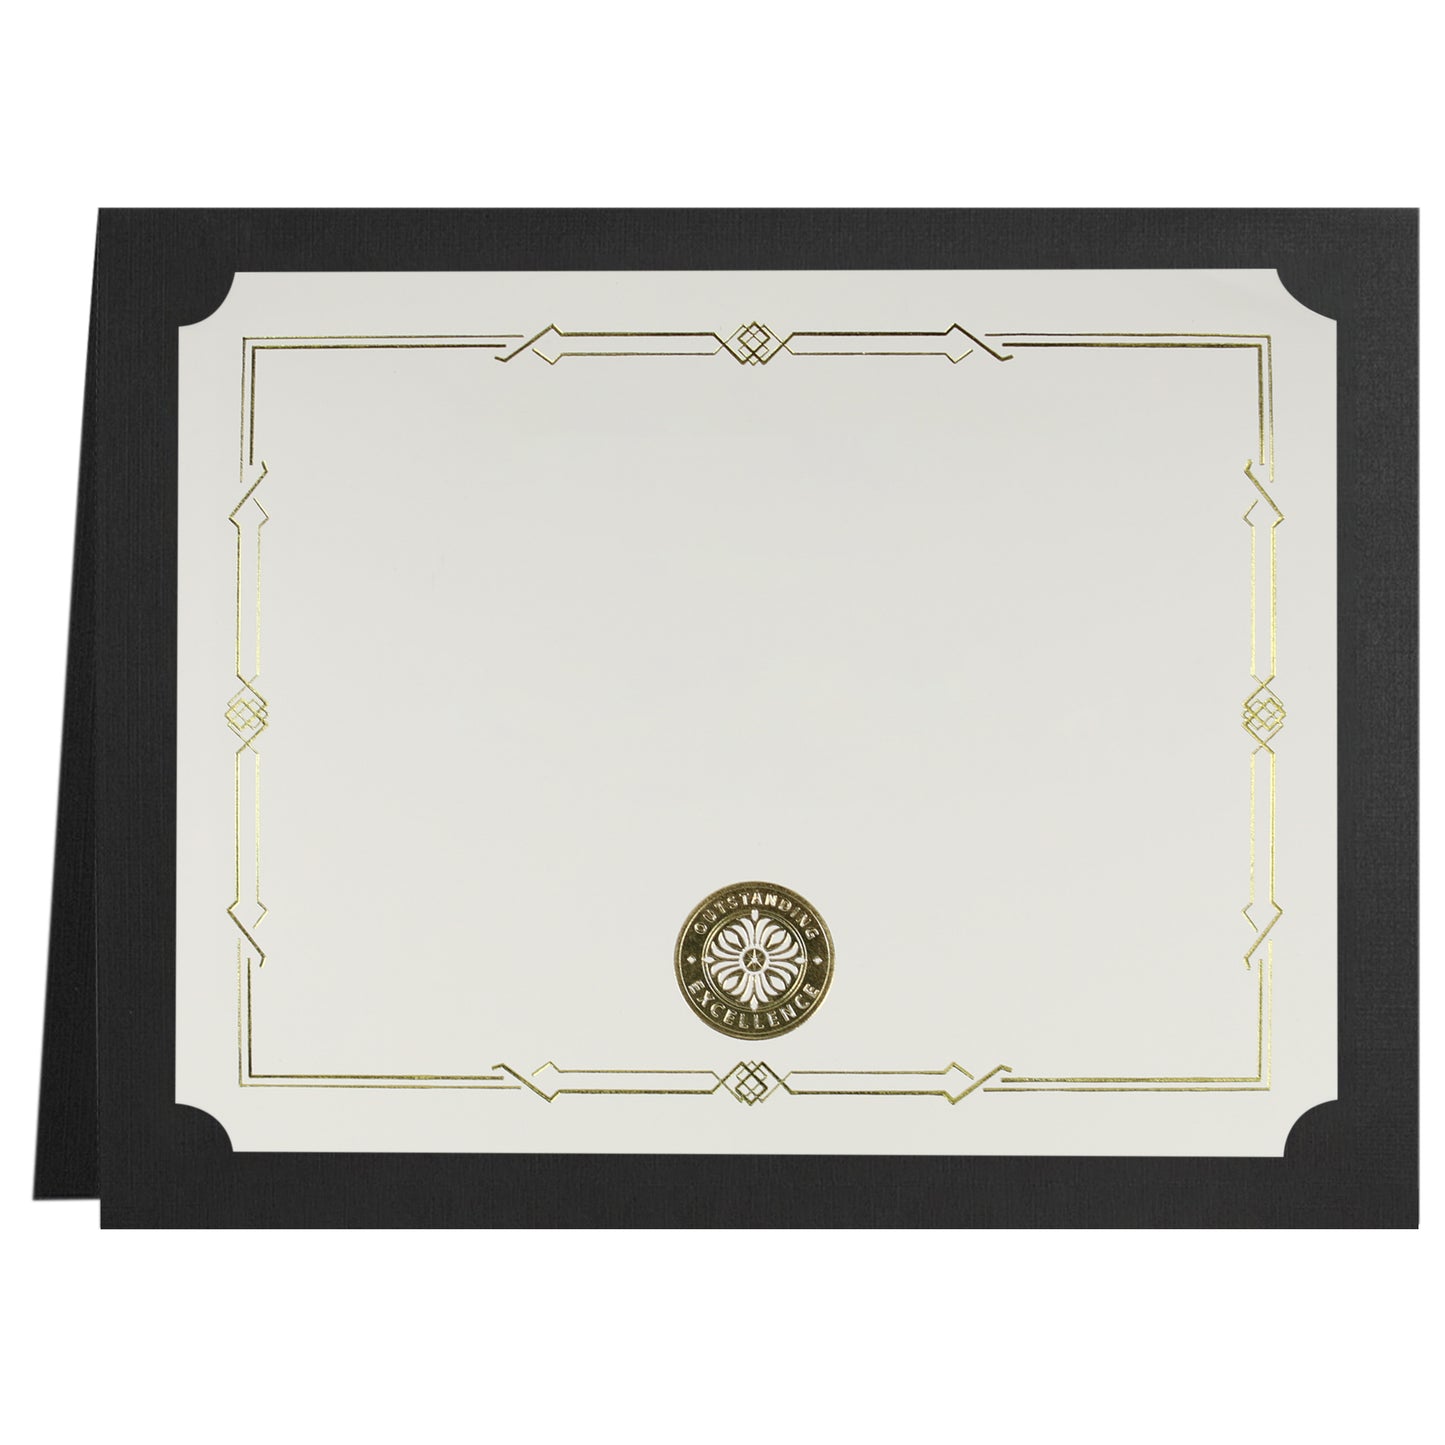 St. James® Certificate Holders/Document Covers/Diploma Holders, Black, Gold Foil, Linen Finish, Pack of 5, 83808